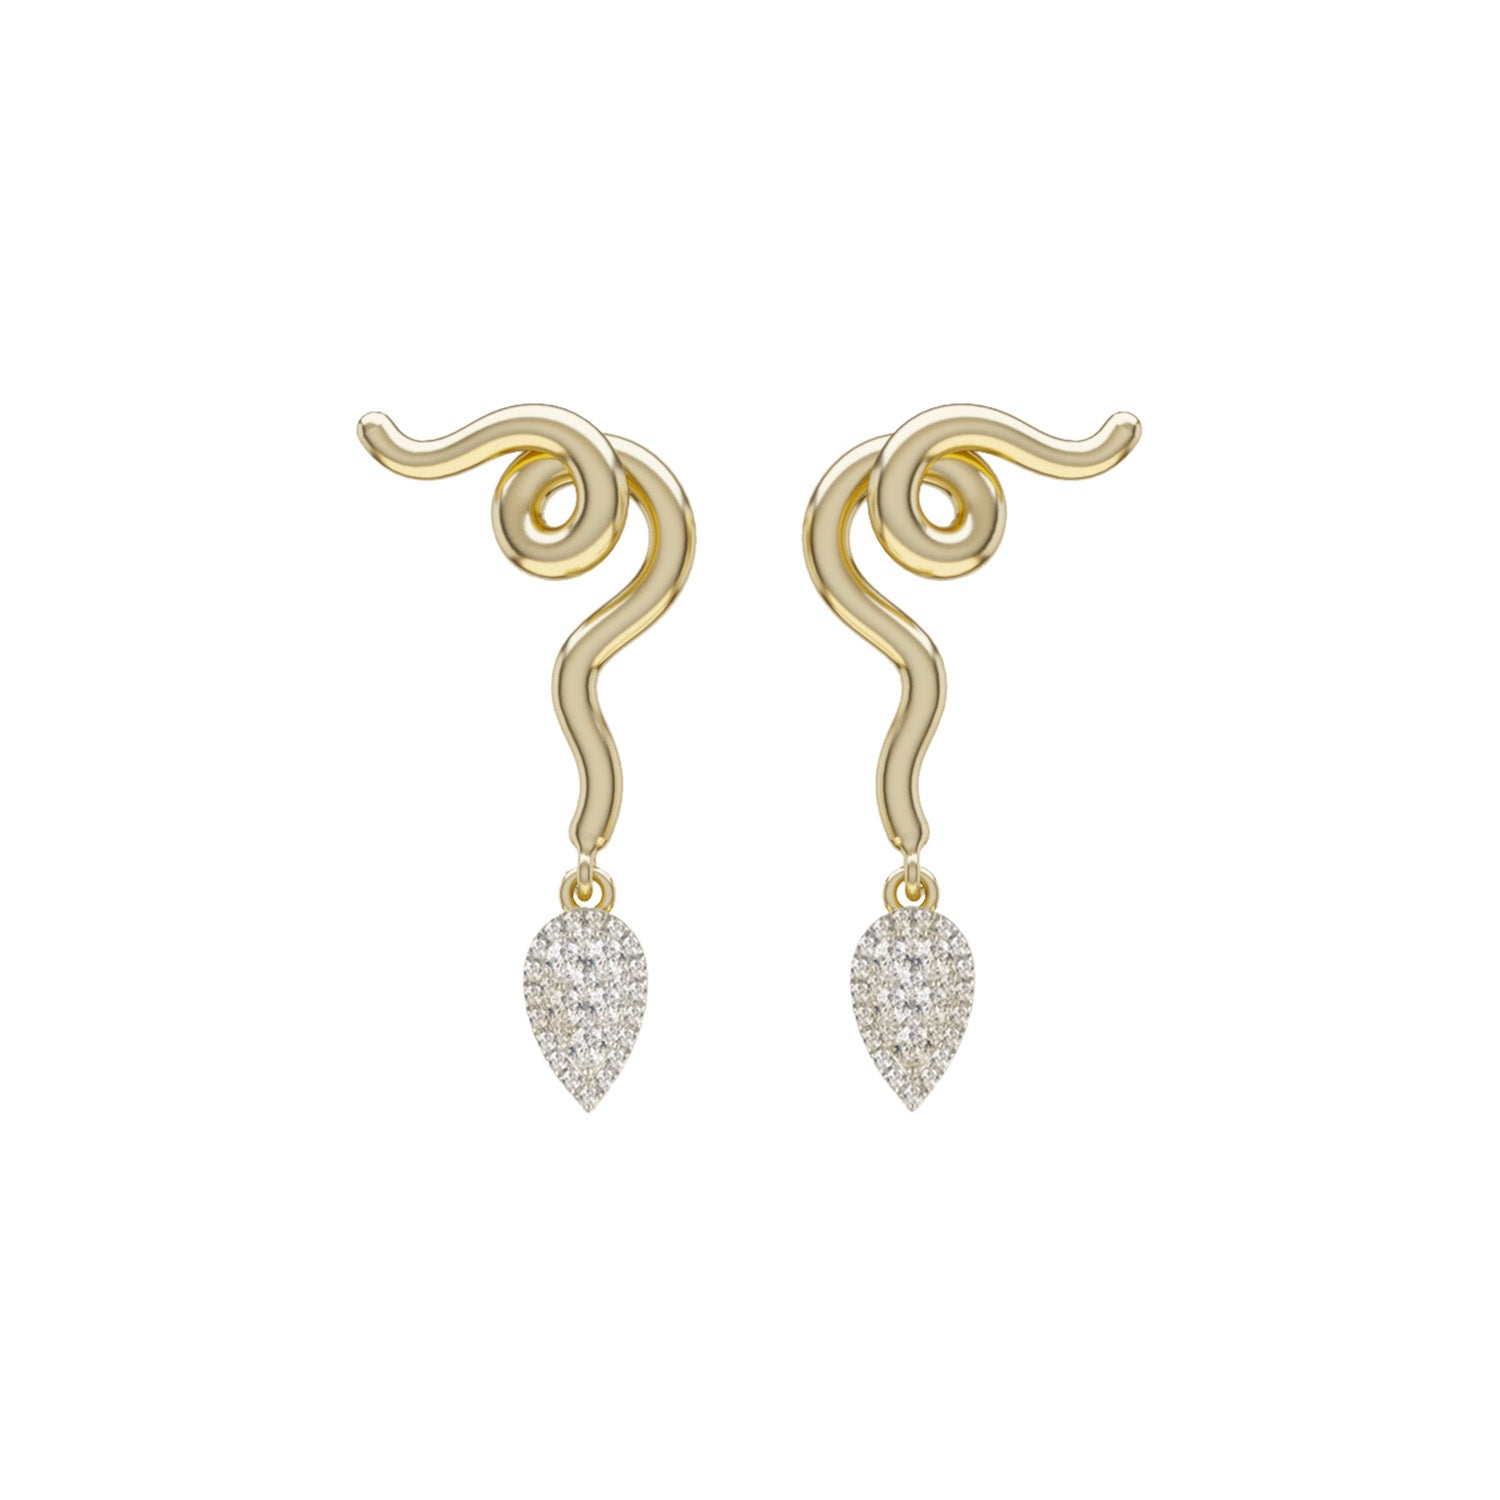 A pair of Bea Bongiasca Vine Drop Earrings with diamond embellishments.